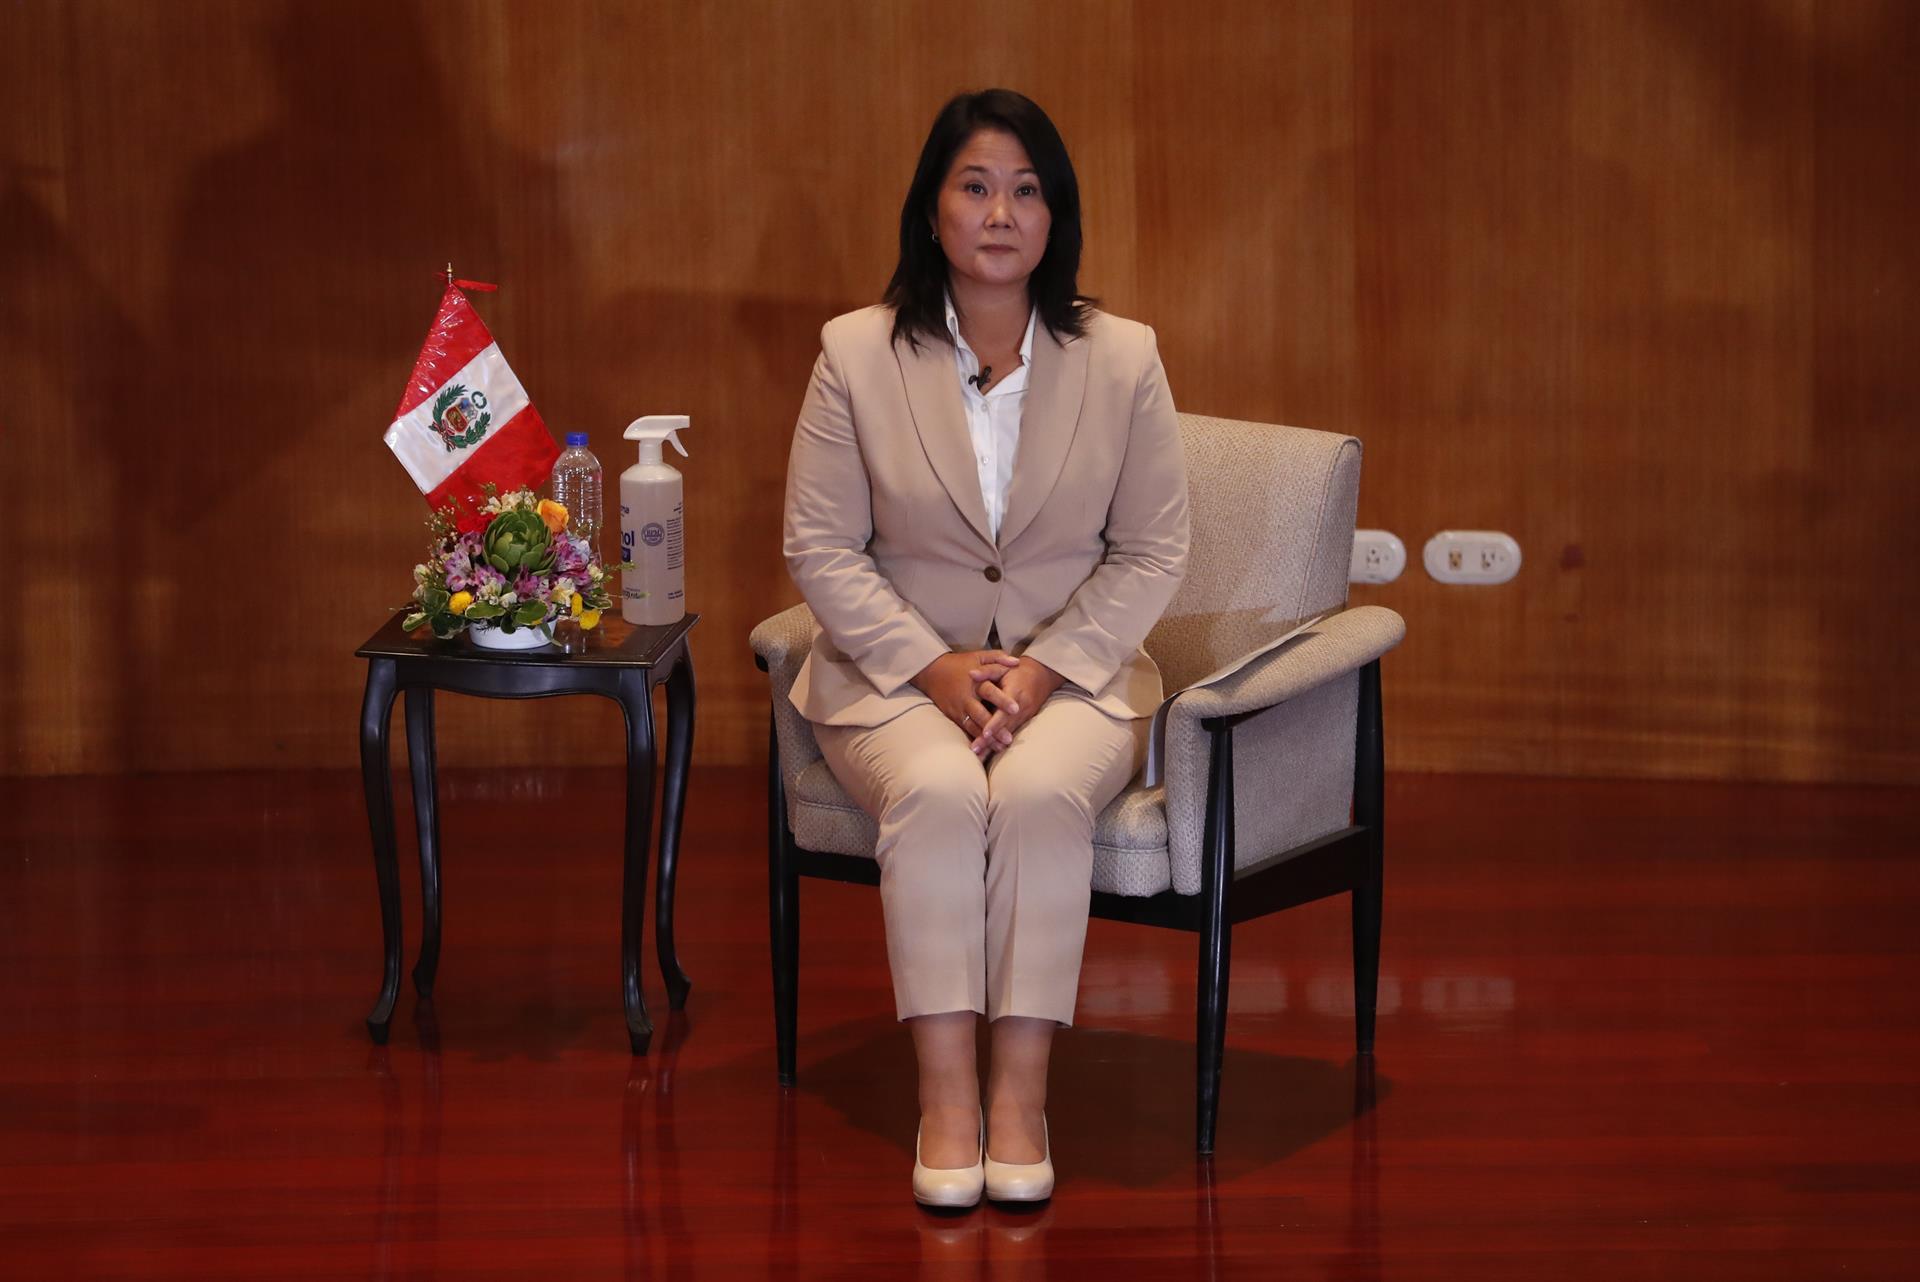 Candidata à presidência do Peru, Keiko Fujimori